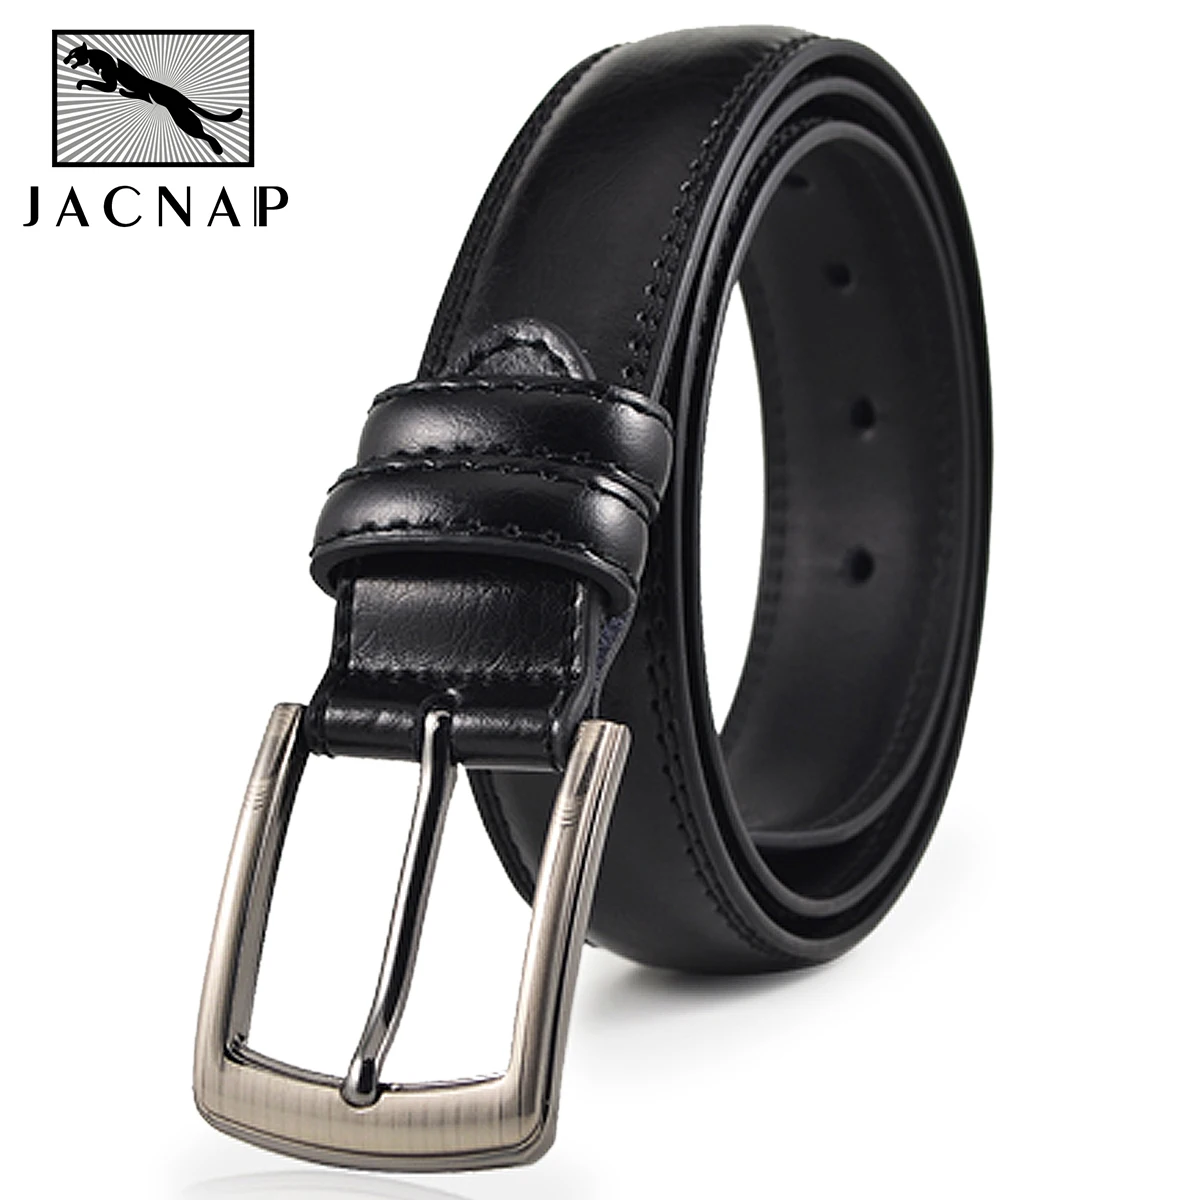 JACNAIP Pin Buckle Leather Belts for Men Cowboy Genuine Luxury Straps Brand jeans Casual Vintage Design Adjustable Male Belts